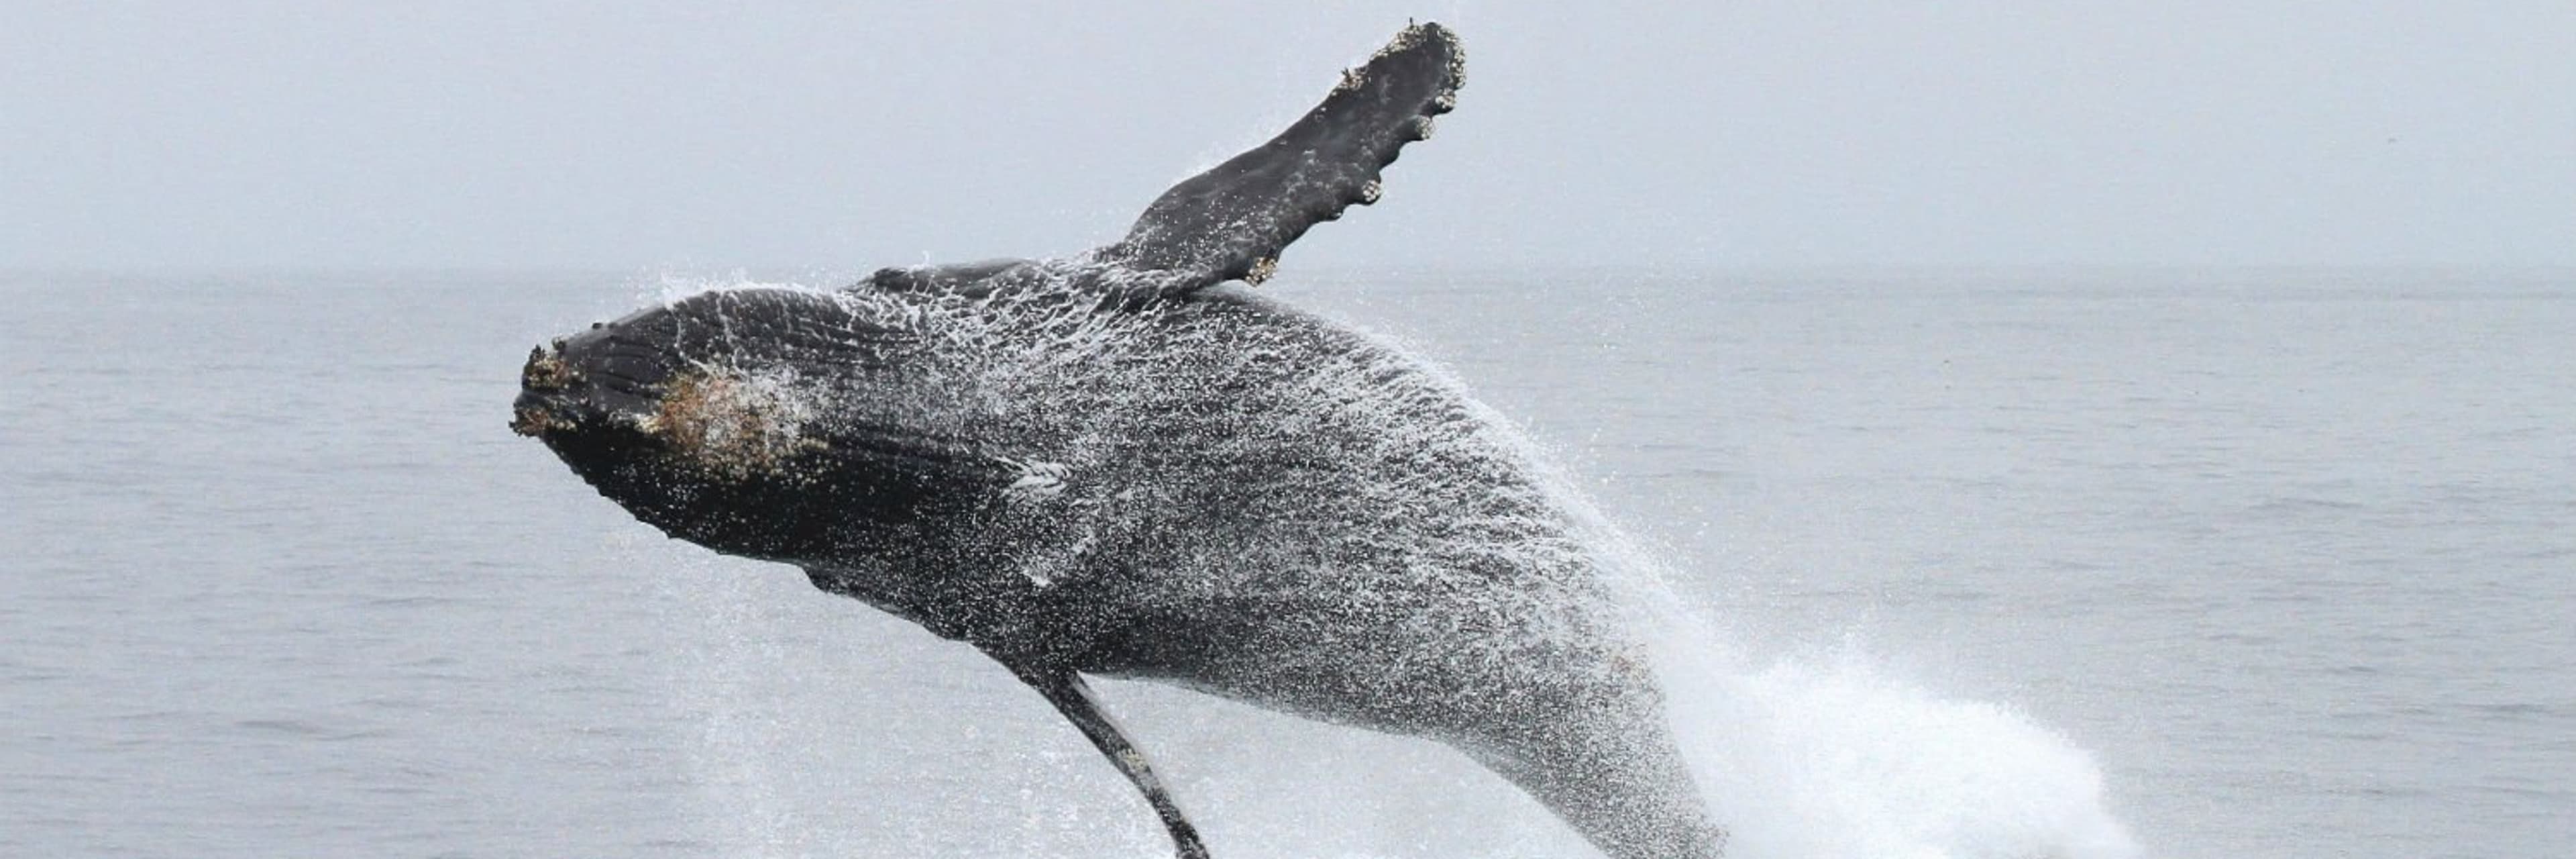 Winter Whale Watching San Diego Tickets Discount | Go San Diego Pass